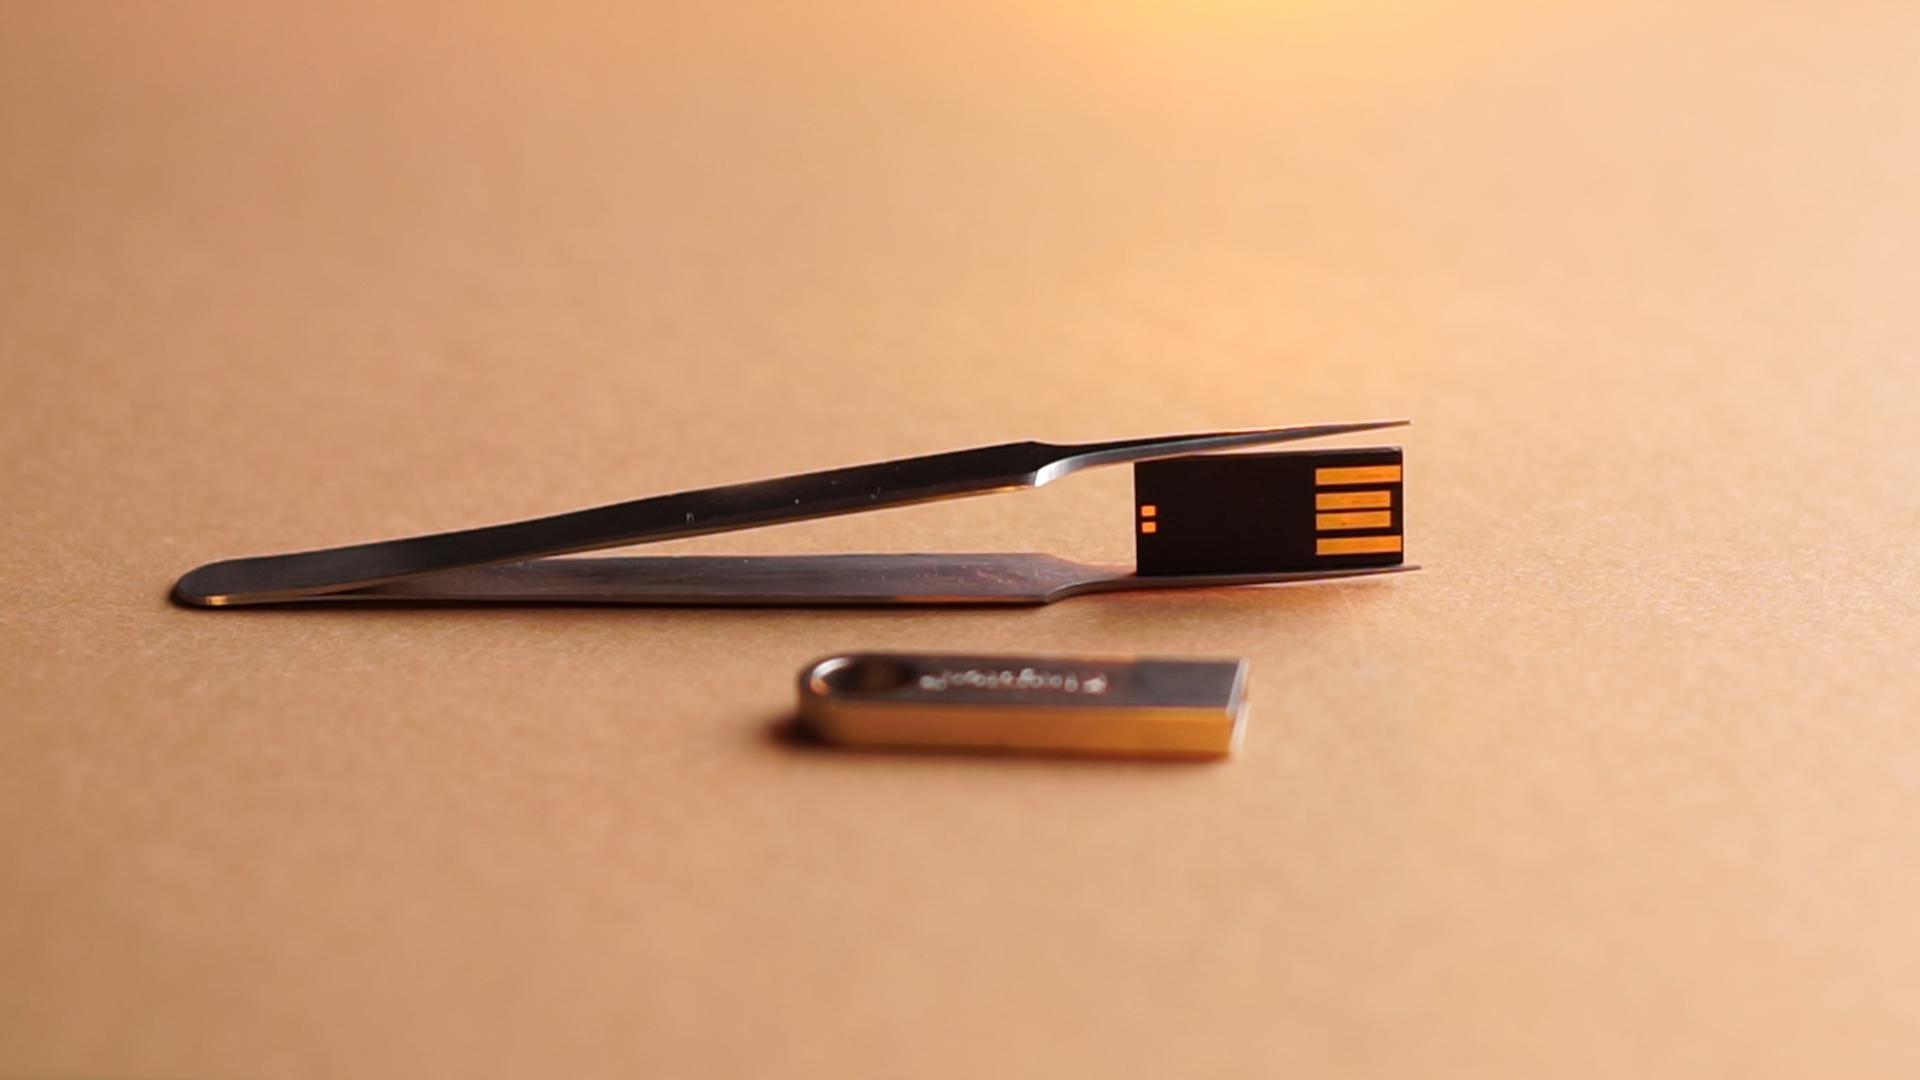 usb flas driveHidden USB Flash Drive - Self Made Memory Storage Inside a Power Bank Barely Painted.jpg